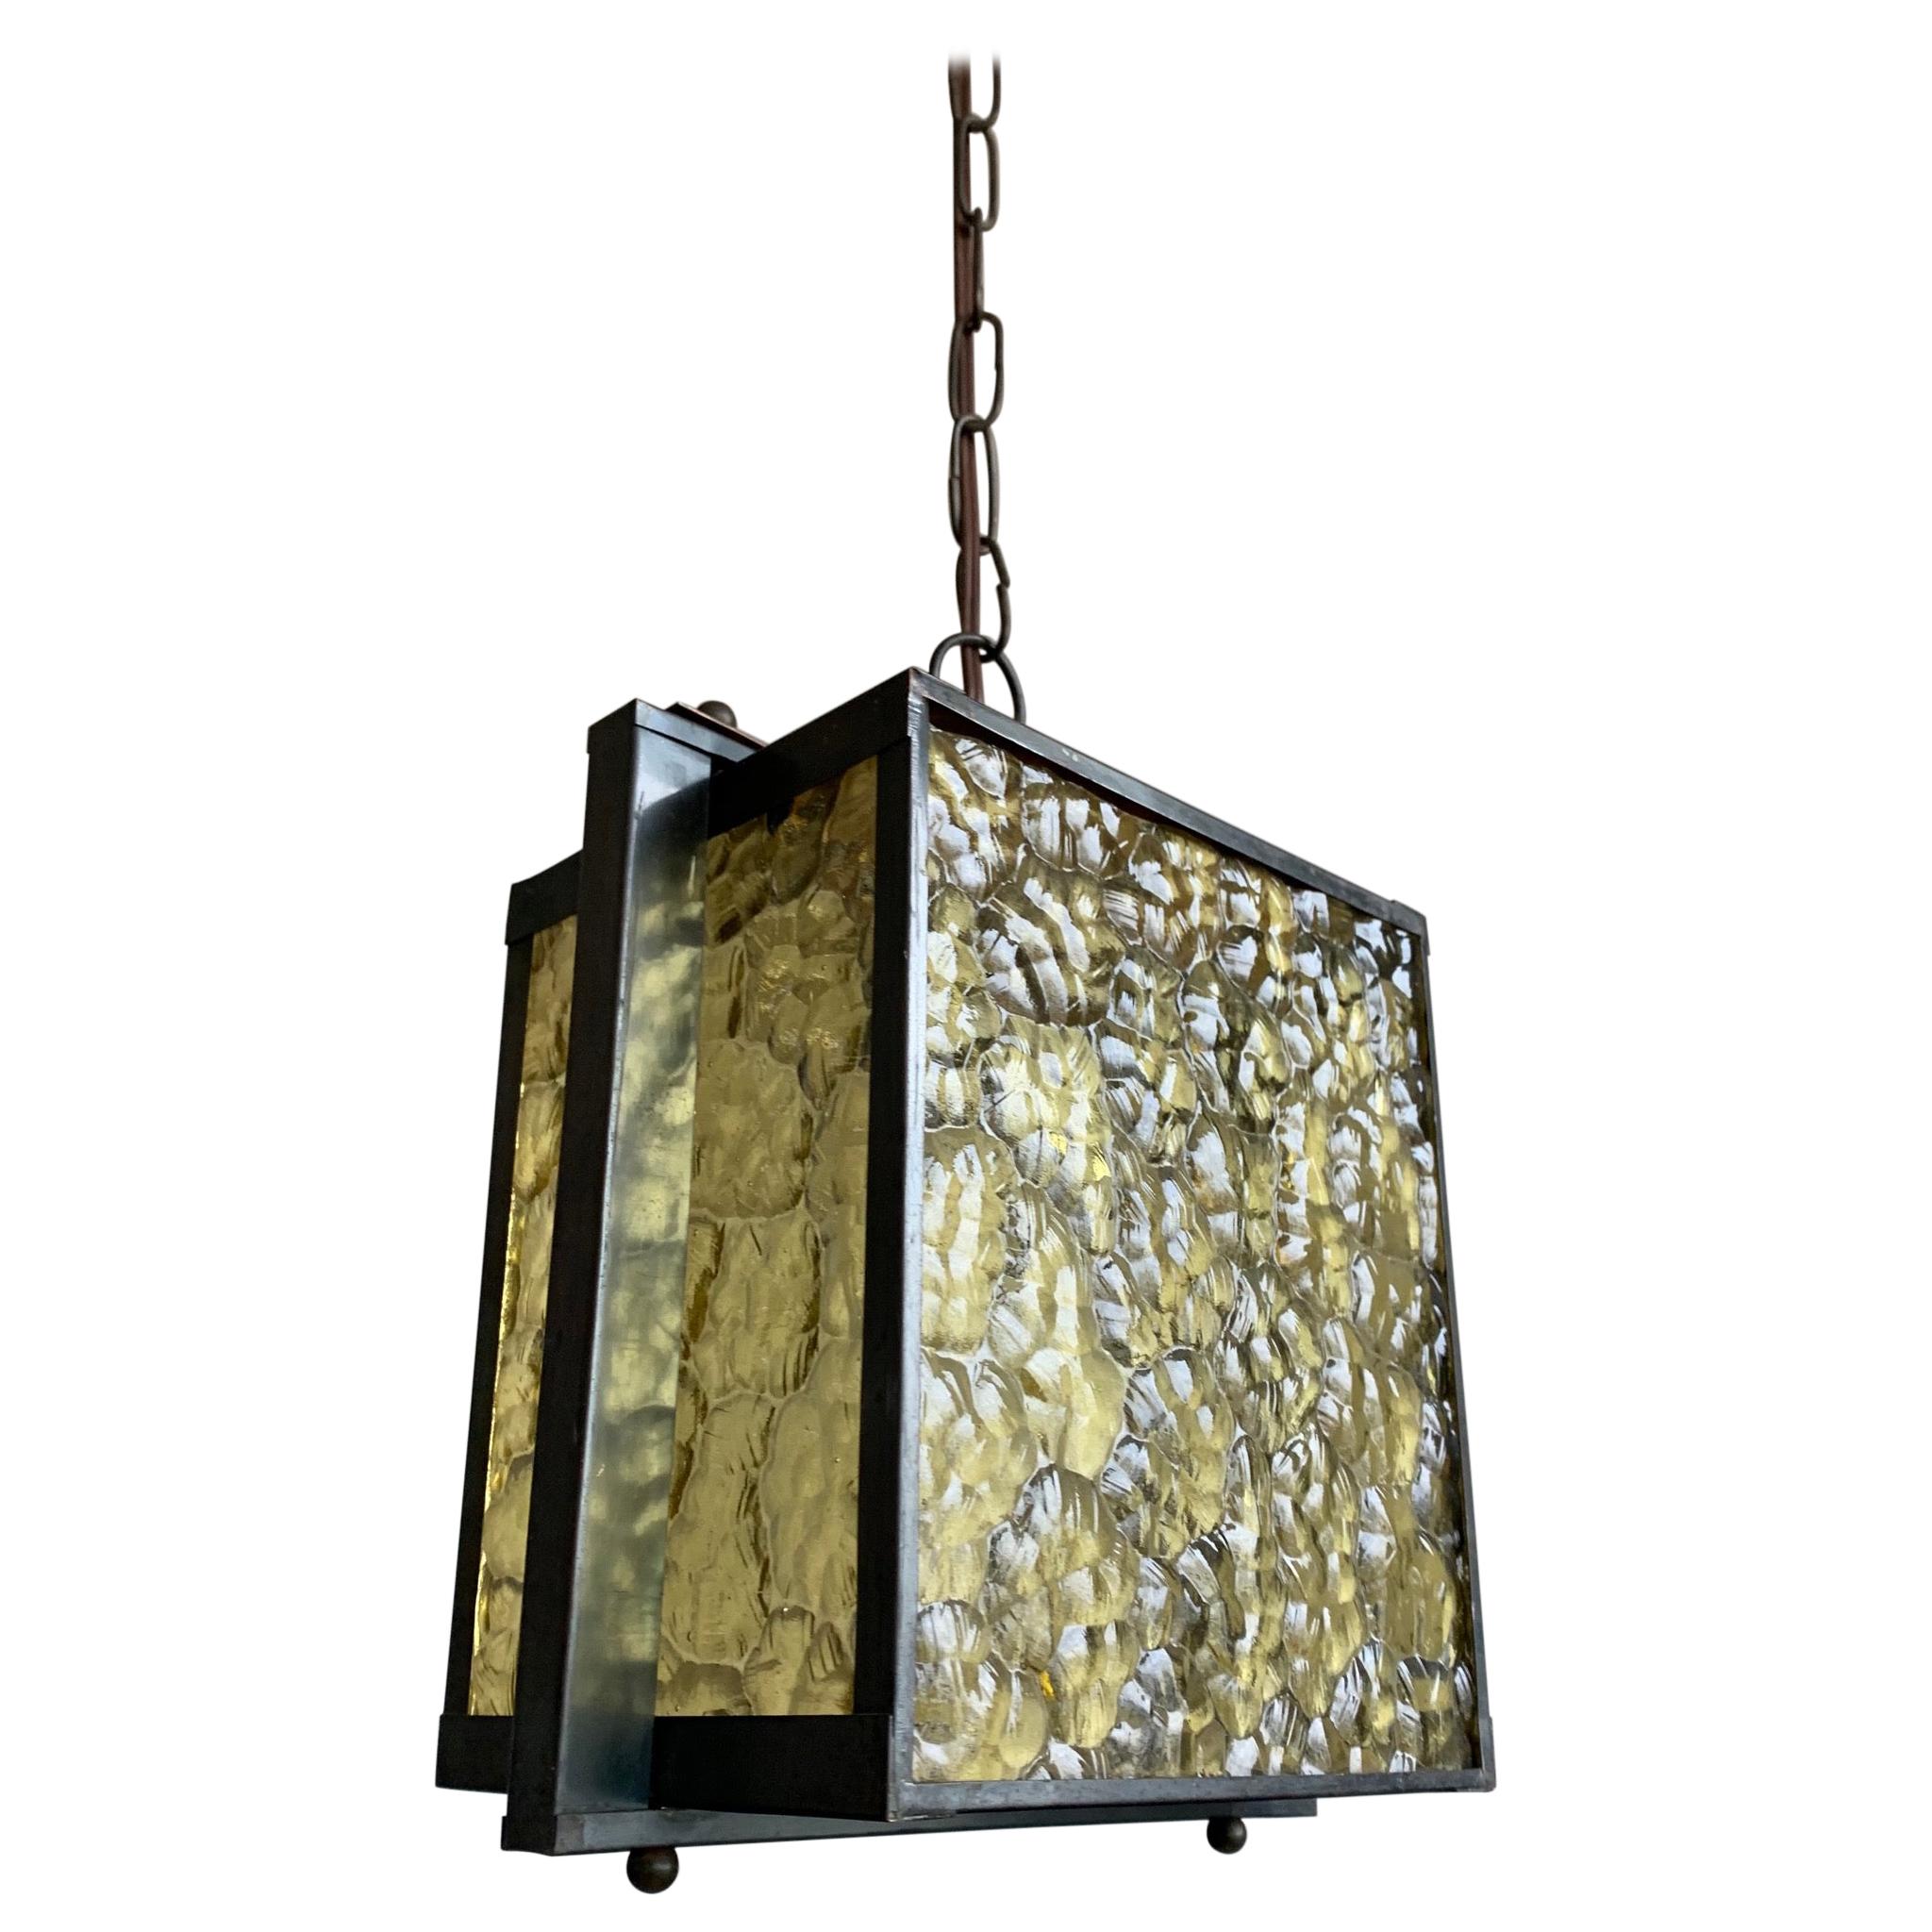 Striking Design 1930 Cubical Shape Copper Pendant / Lantern with Ripple Glass